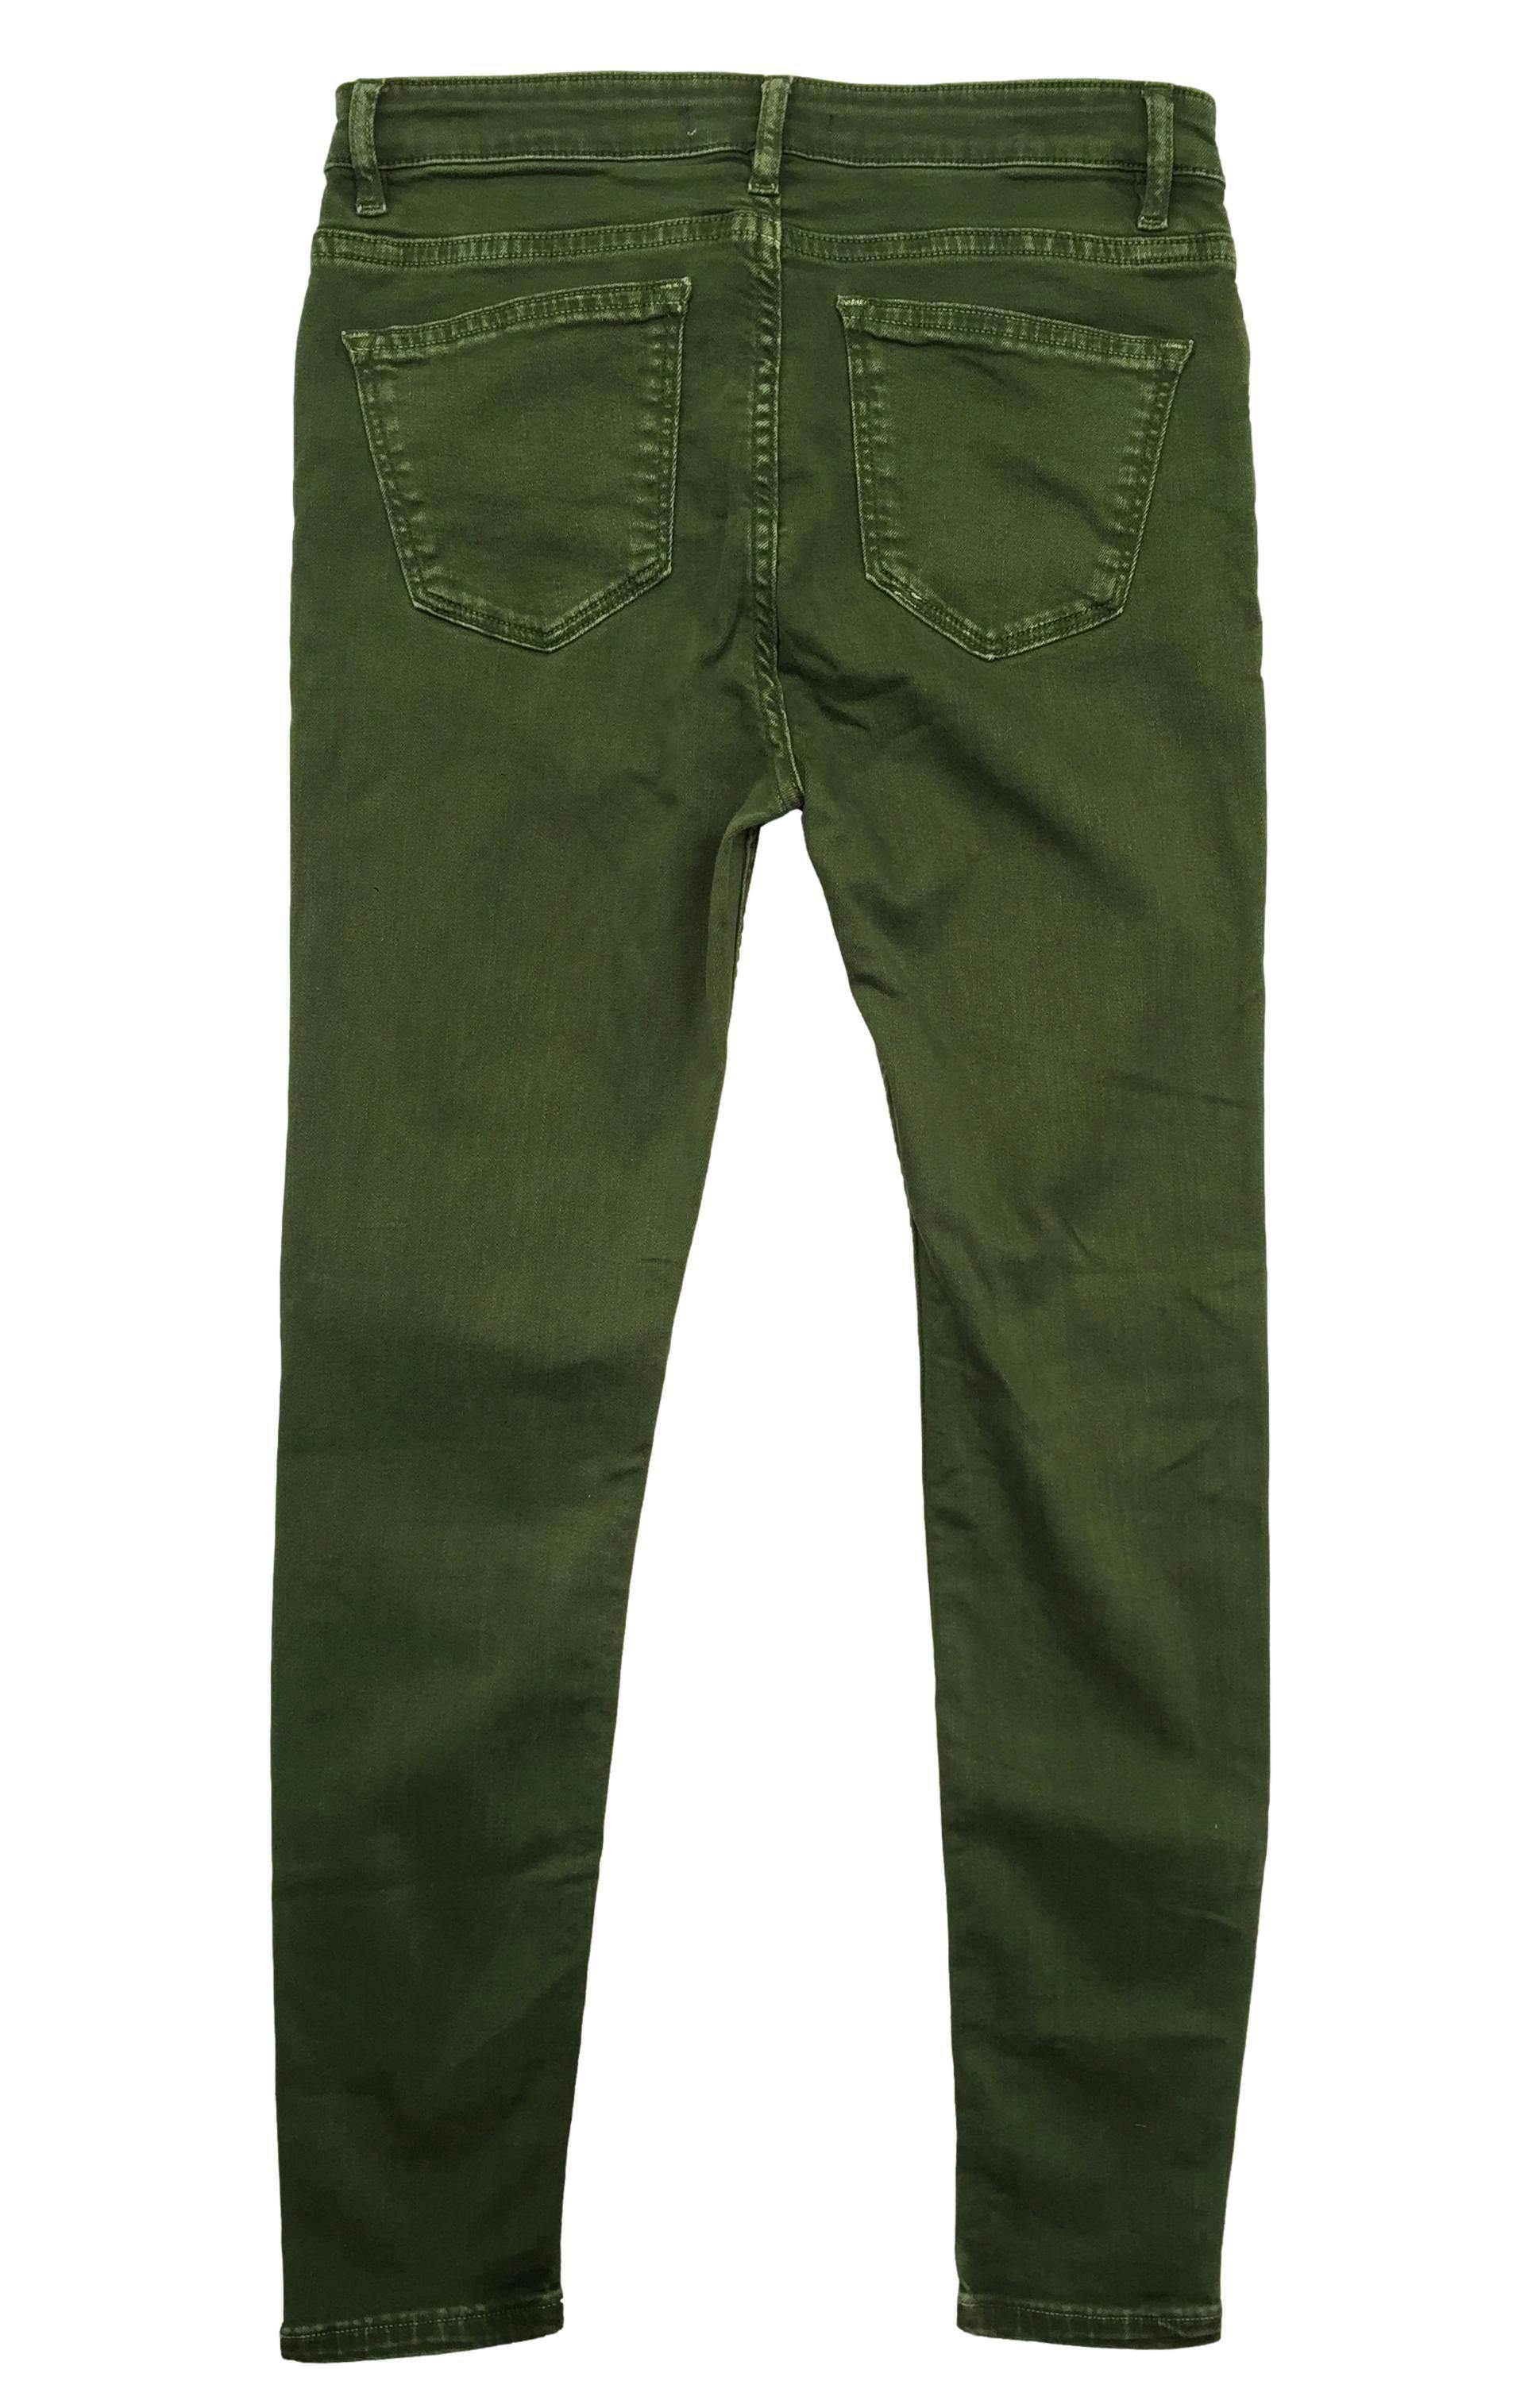 Pantalón jean Zara verde, four pockets. Cintura 74 cm, Tiro 23 cm, Largo 93 cm.